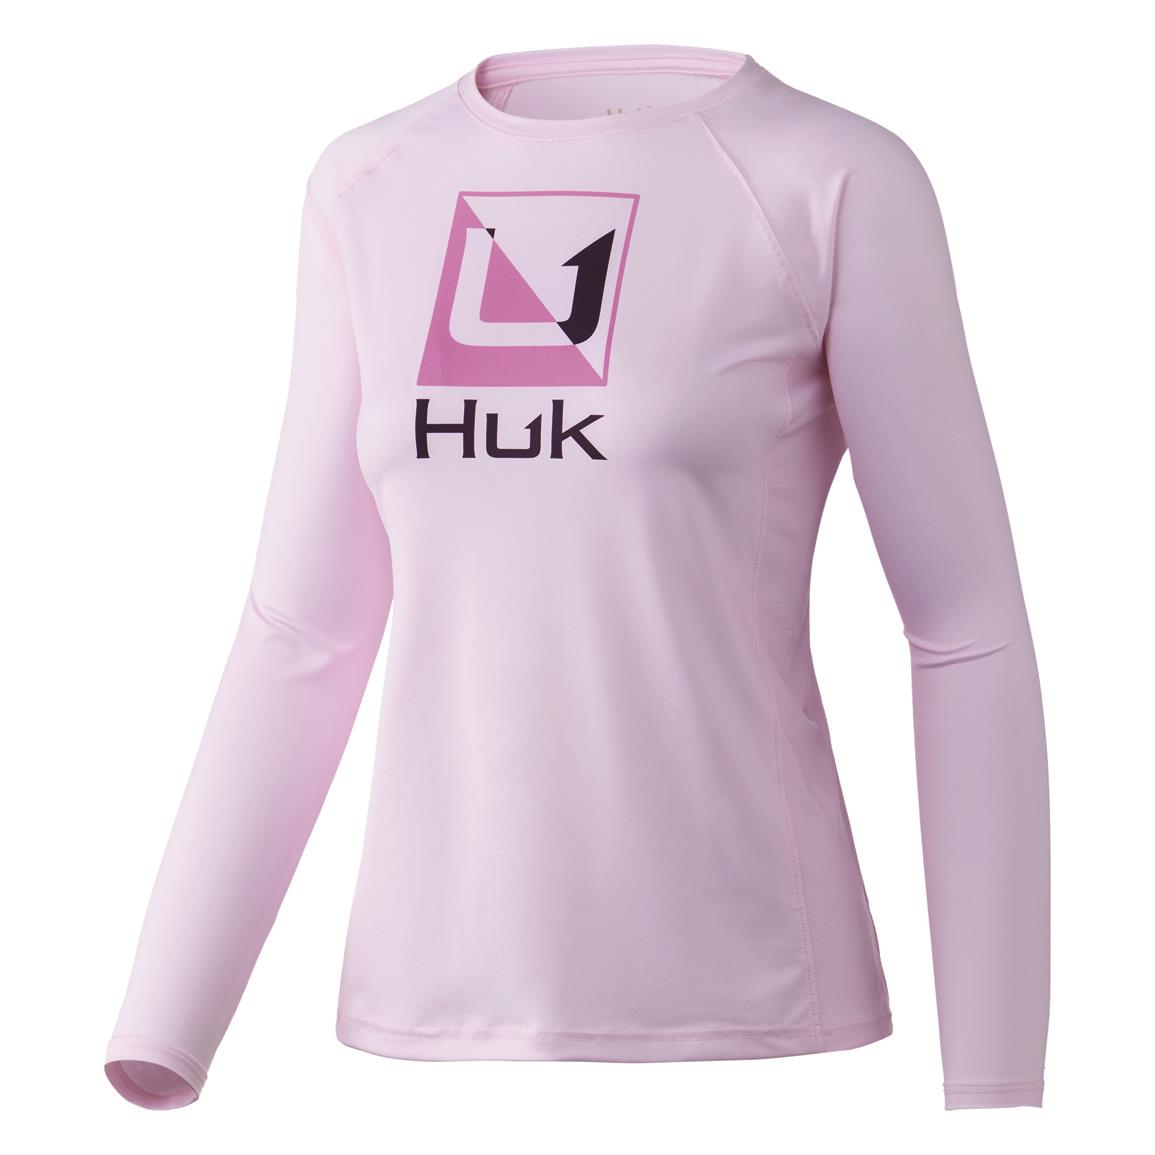 Huk Women's Reflection Pursuit Shirt, Barely Pink